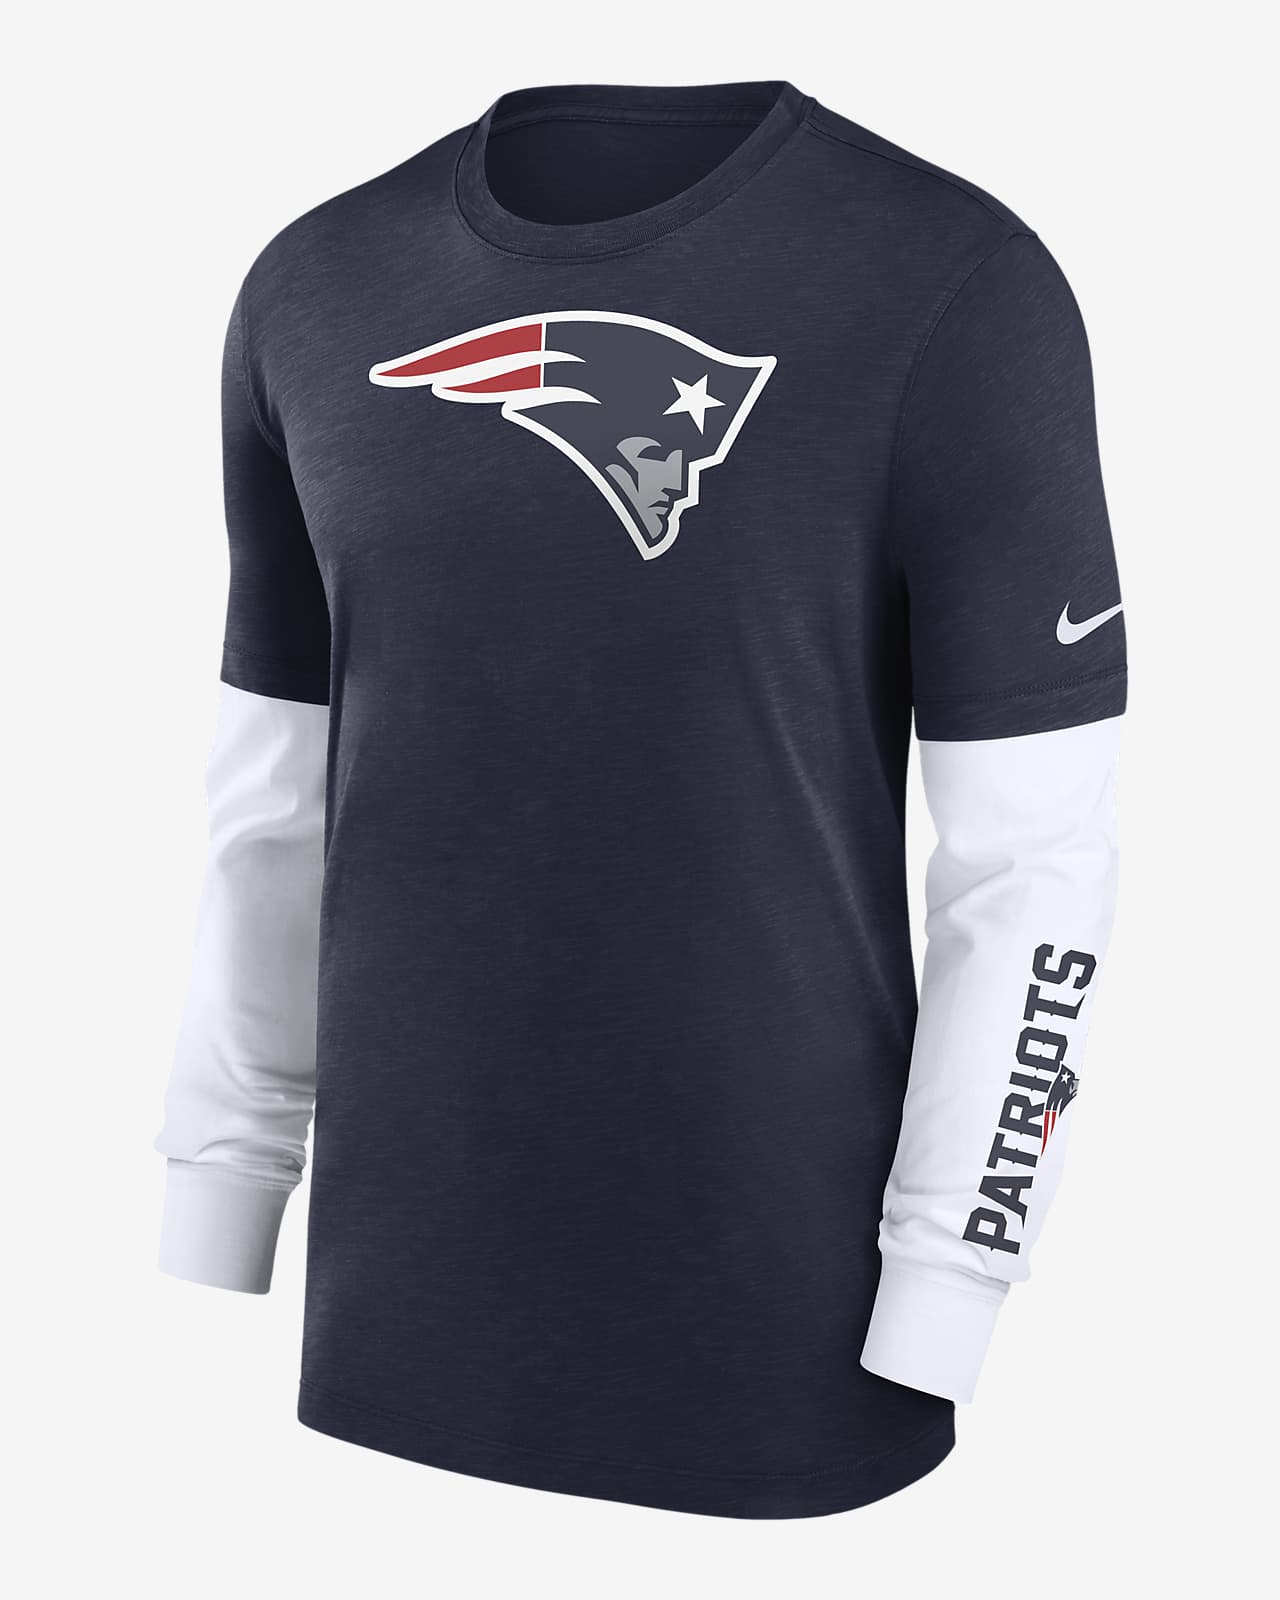 New England Patriots Men's Nike NFL Long-Sleeve Top